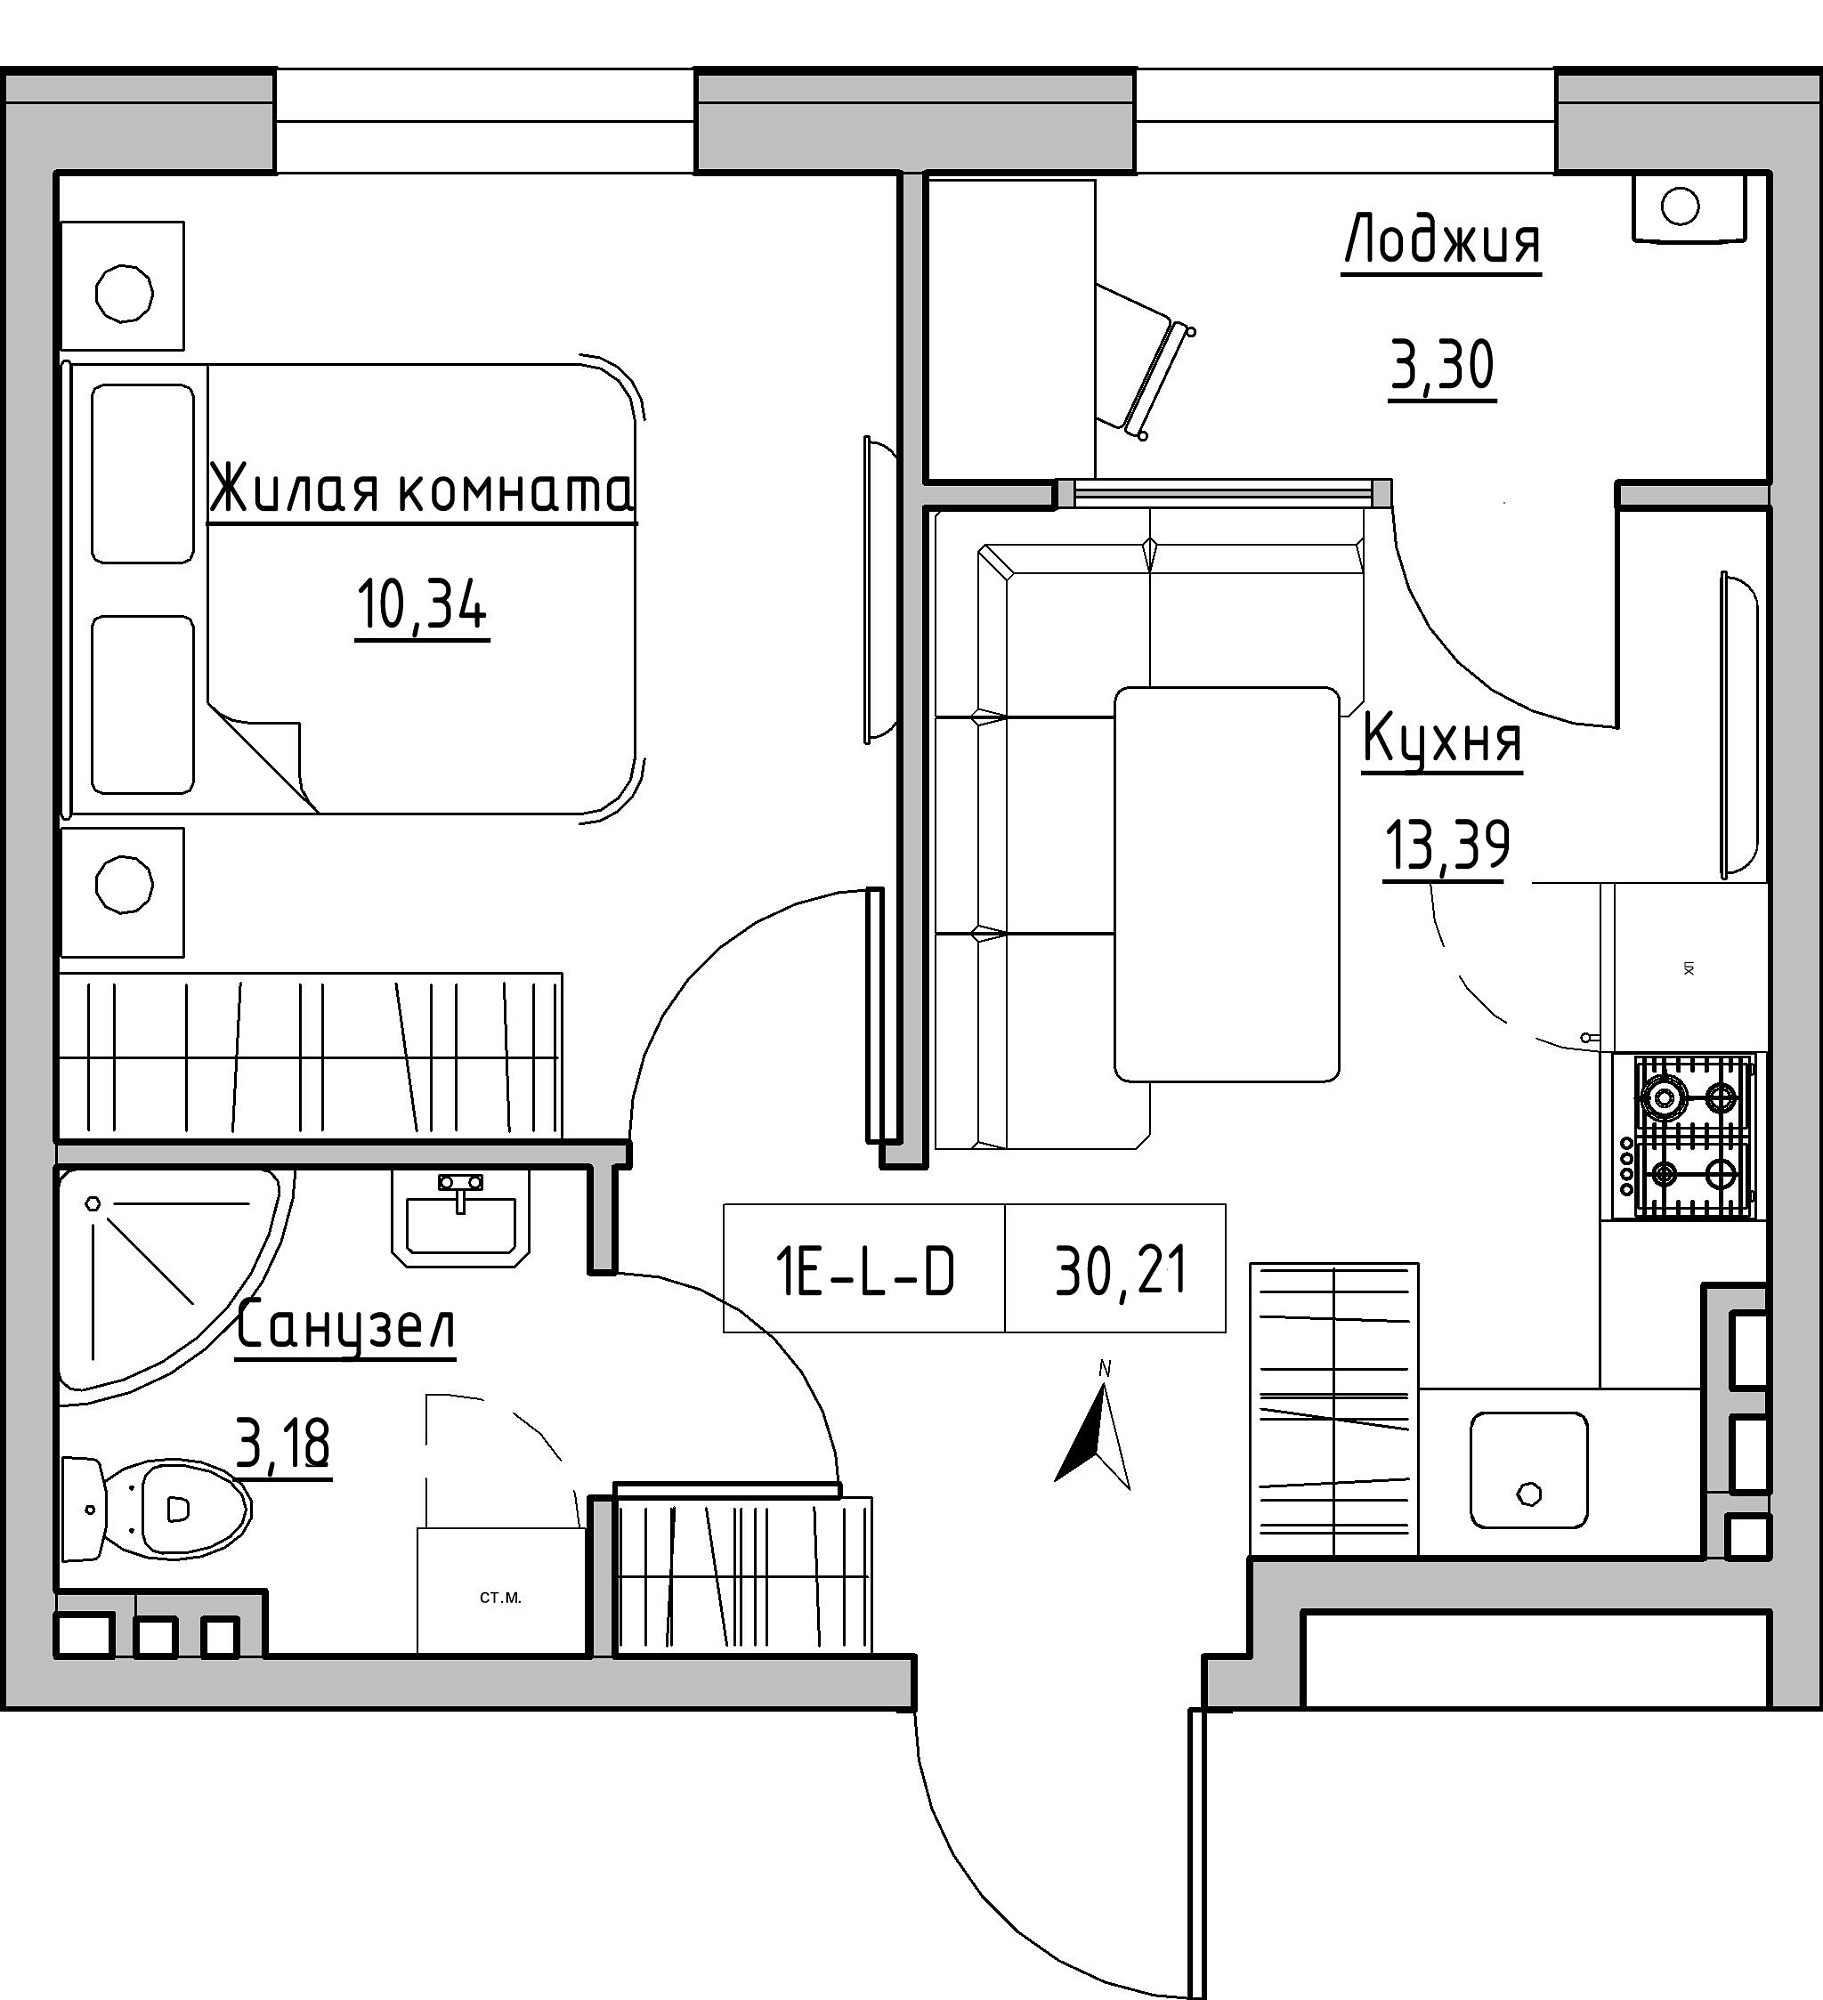 Planning 1-rm flats area 30.21m2, KS-024-01/0001.